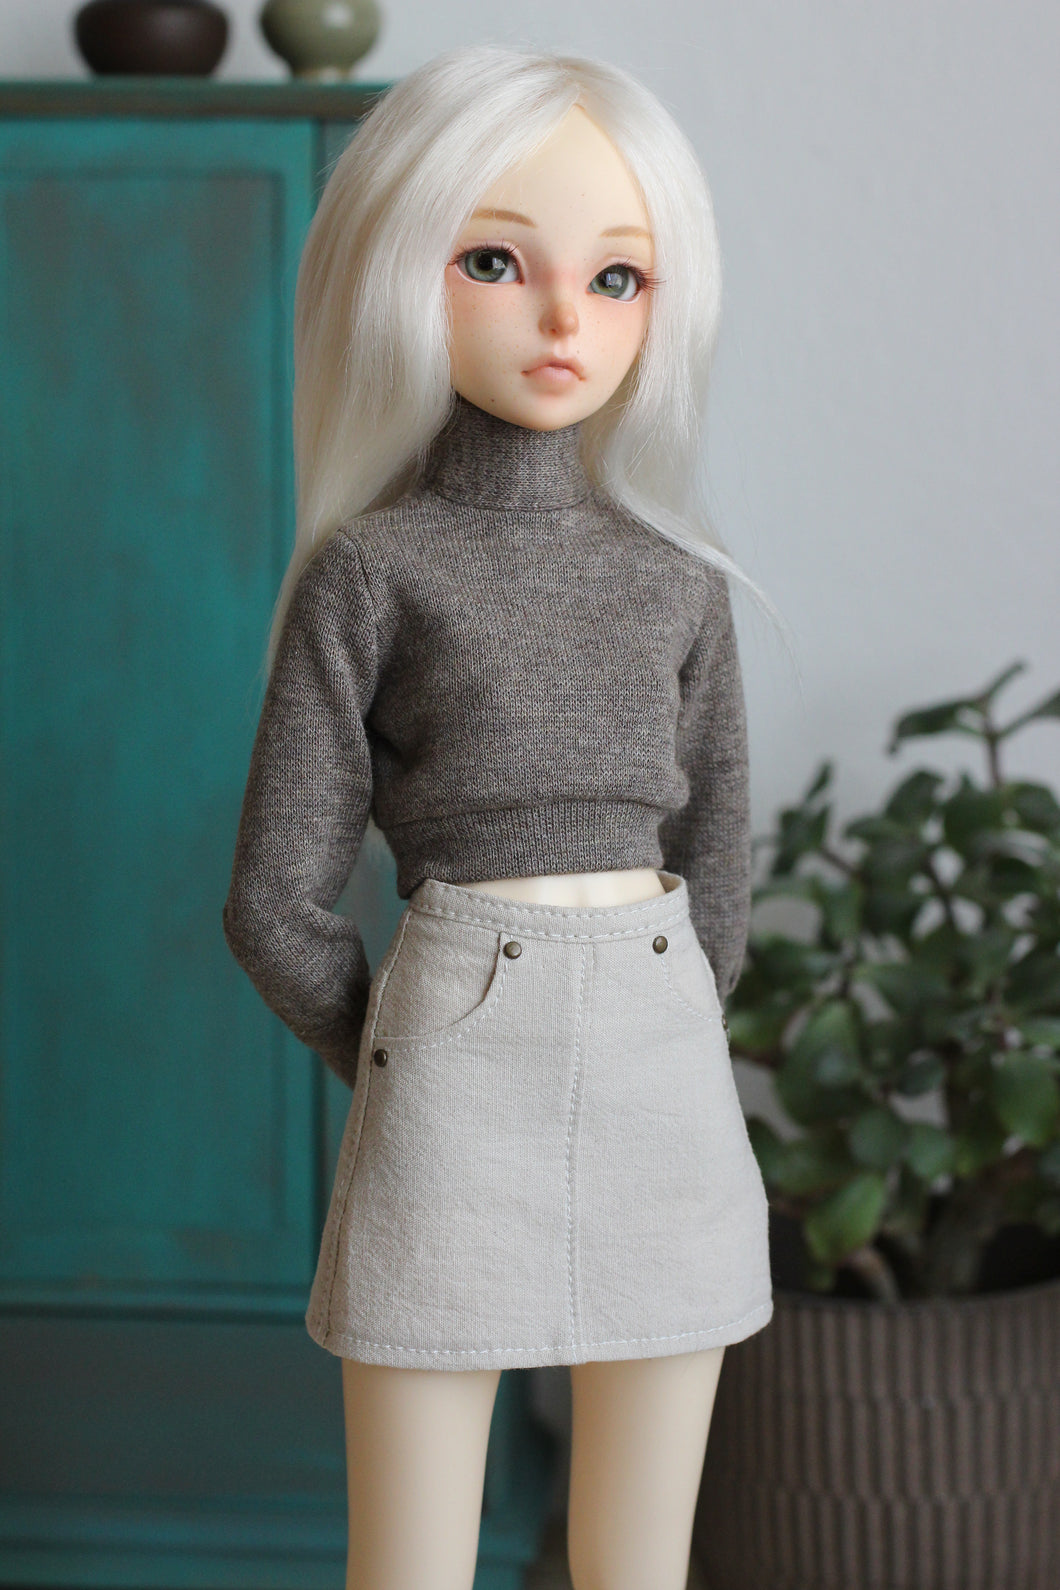 Turtleneck Crop Top And Pencil Skirt.